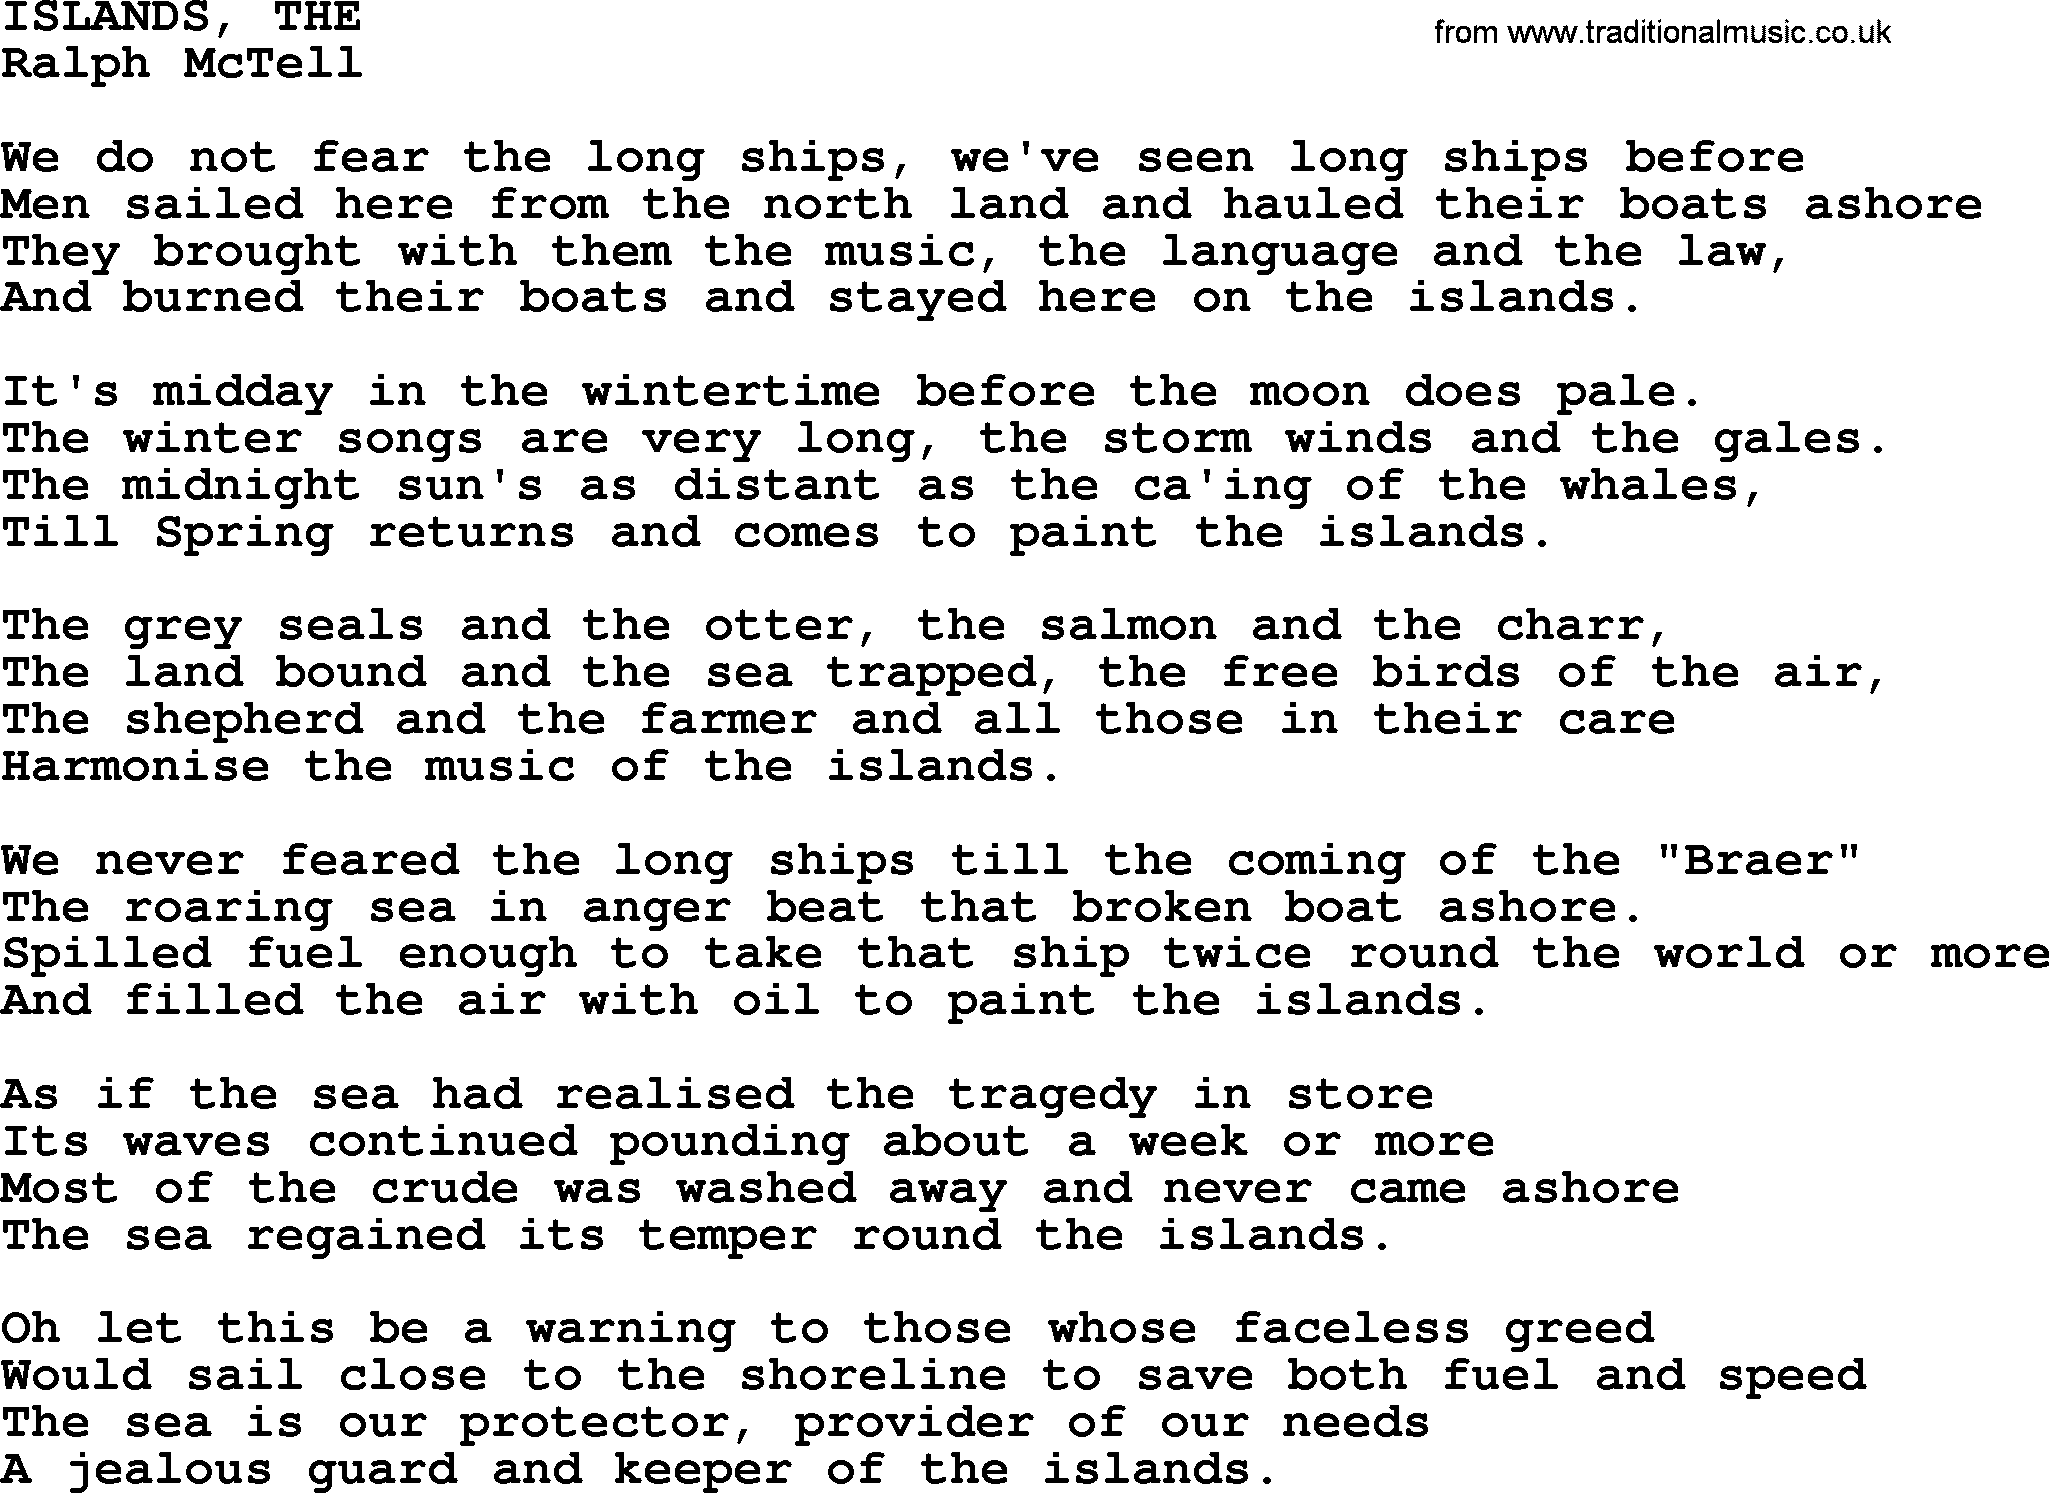 Ralph McTell Song: Islands, The, lyrics